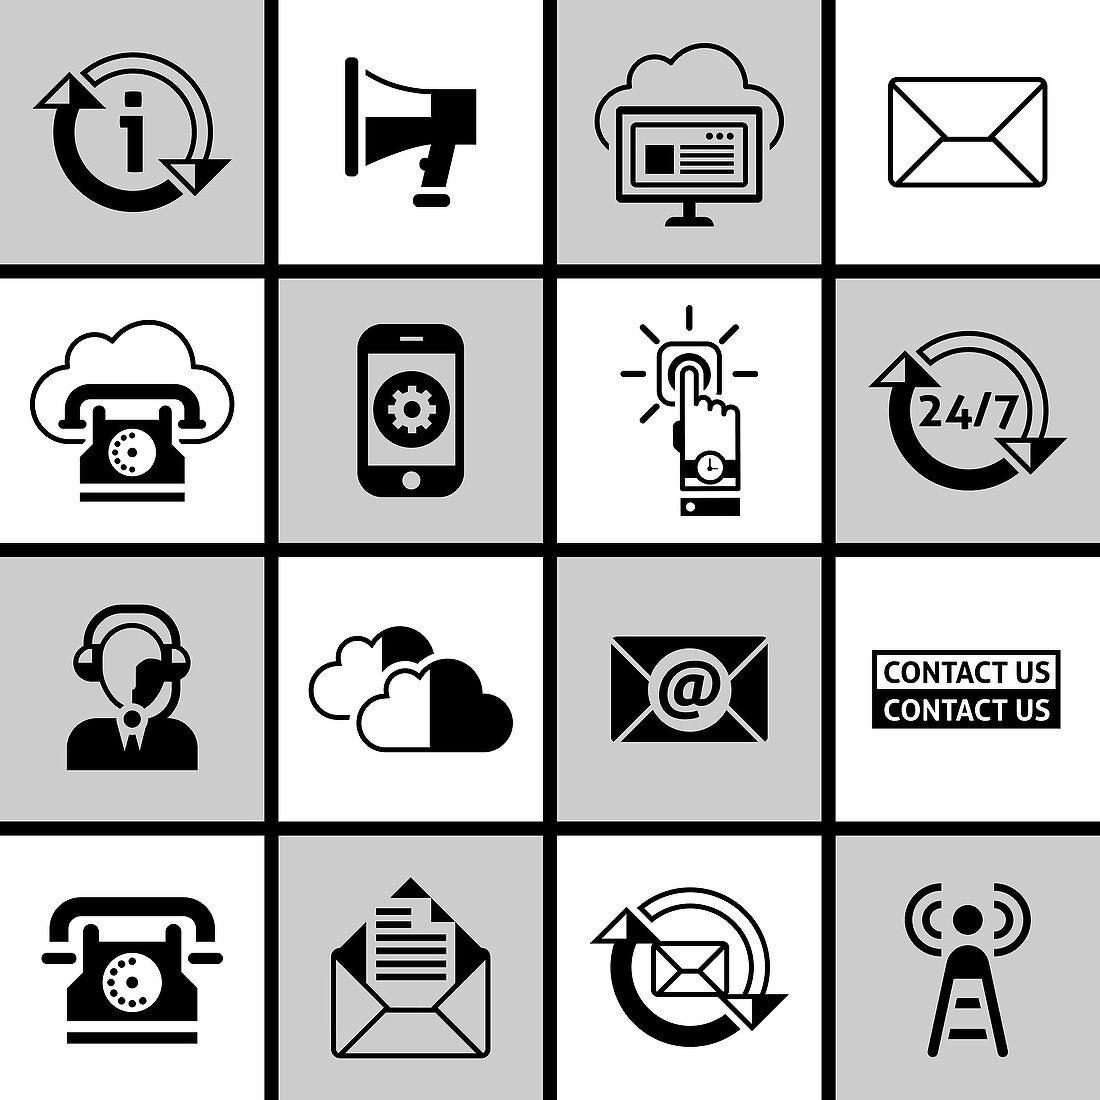 Customer service icons, illustration